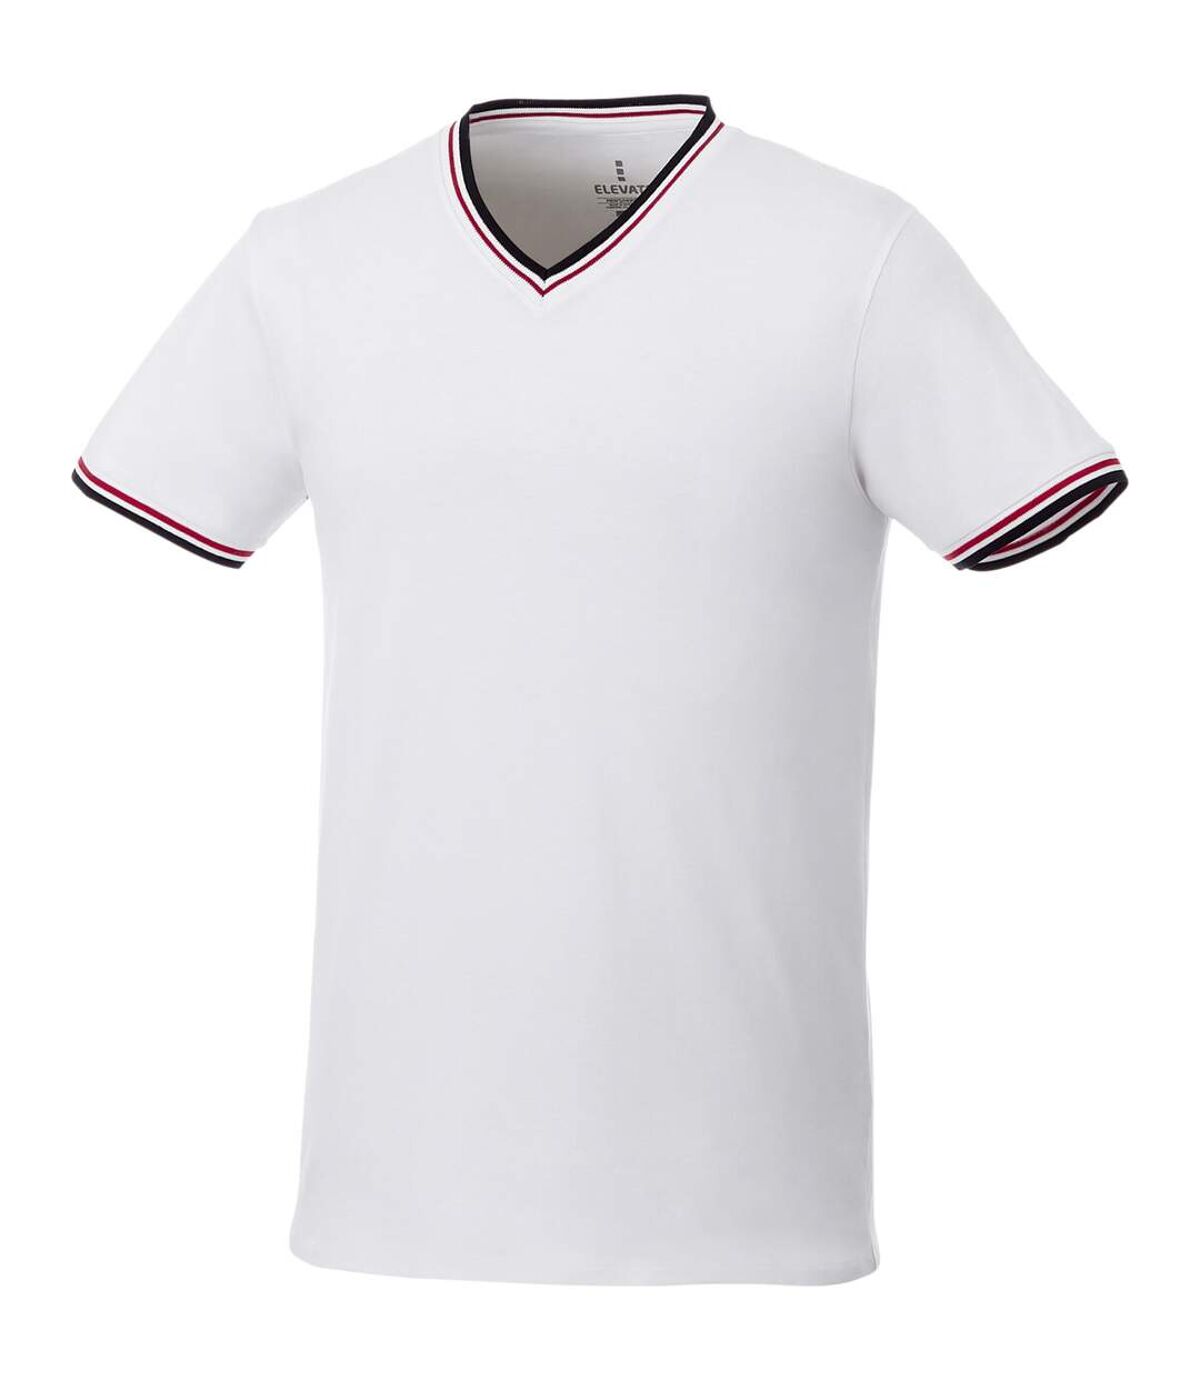 Elevate - T-shirt ELBERT - Homme (Blanc / bleu marine / rouge) - UTPF2349